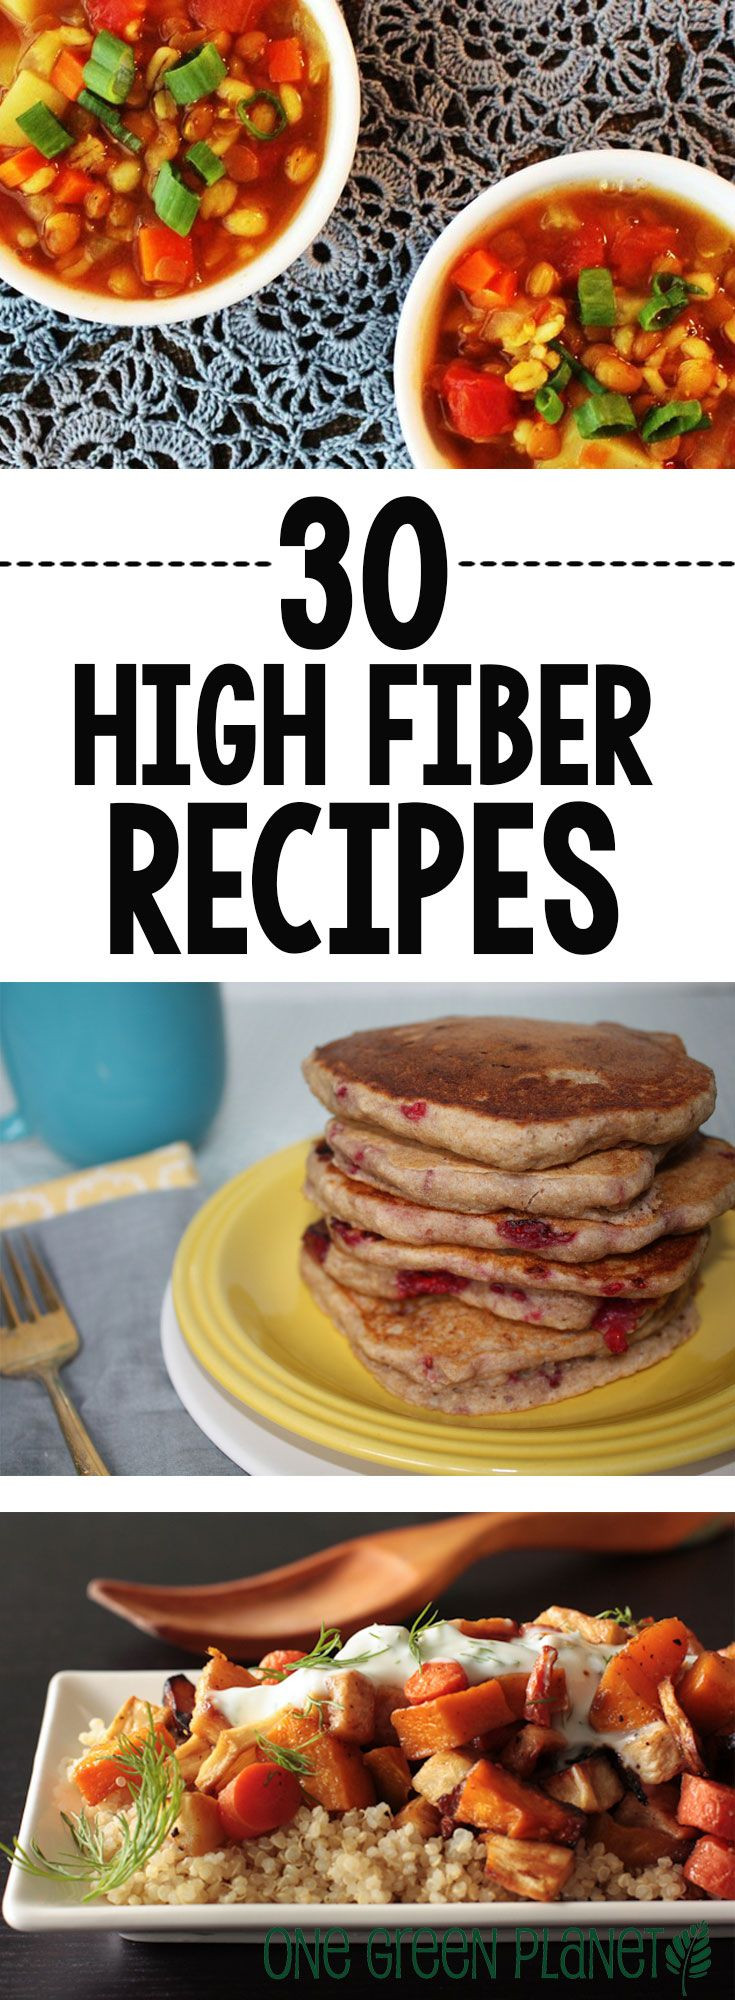 High Fiber Food Recipes
 30 Vegan High Fiber Recipes to Keep Your System Moving